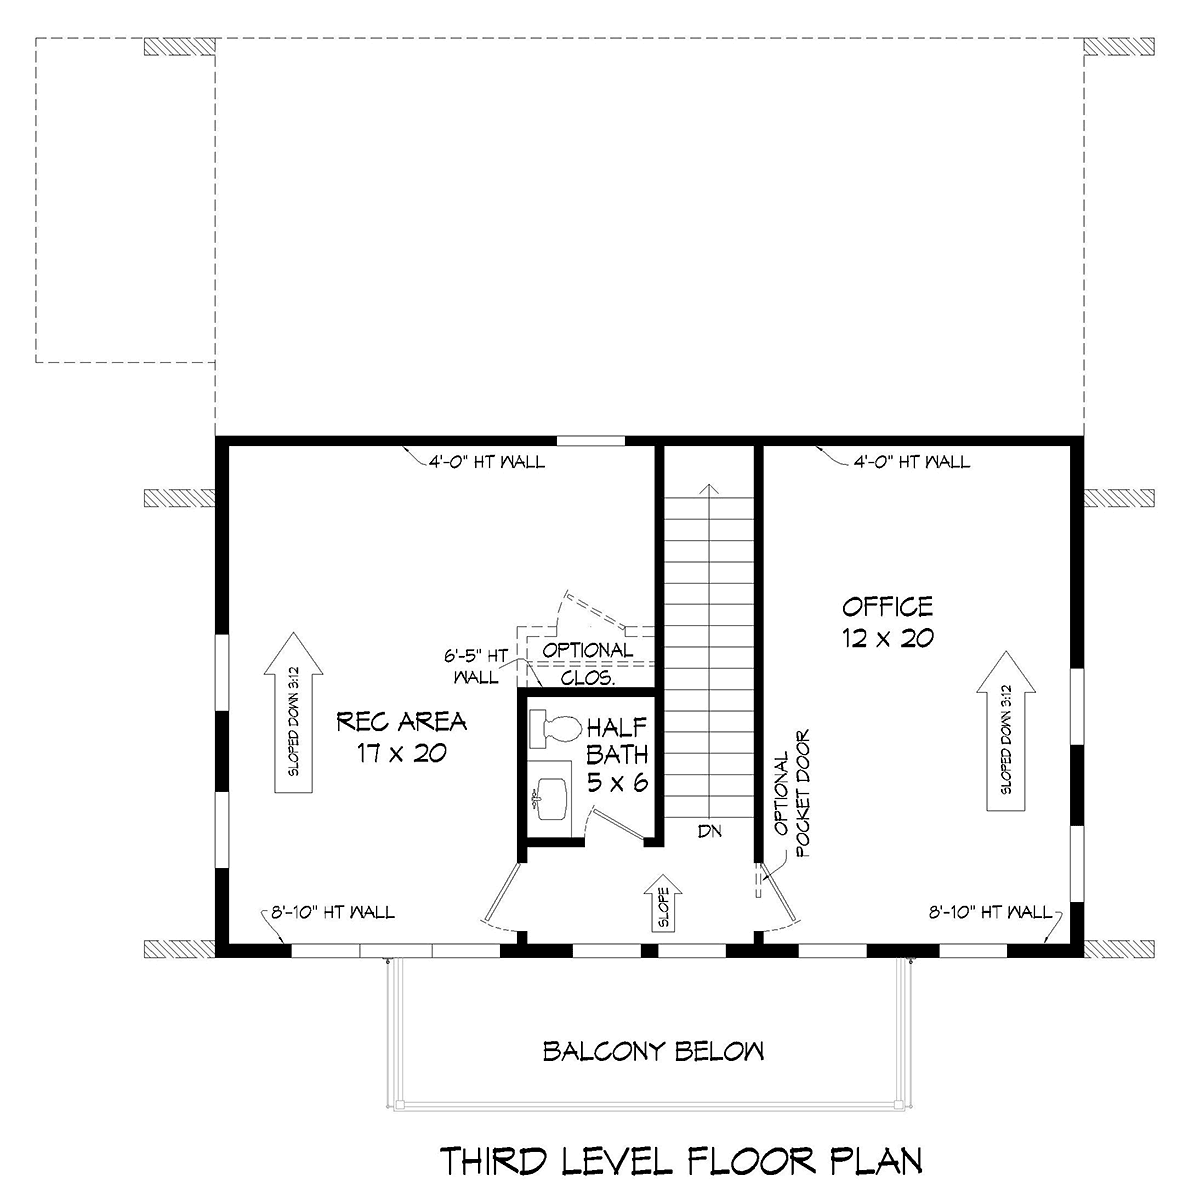 Coastal, Contemporary, Modern Garage-Living Plan 80979 with 3 Bed, 4 Bath, 2 Car Garage Level Three